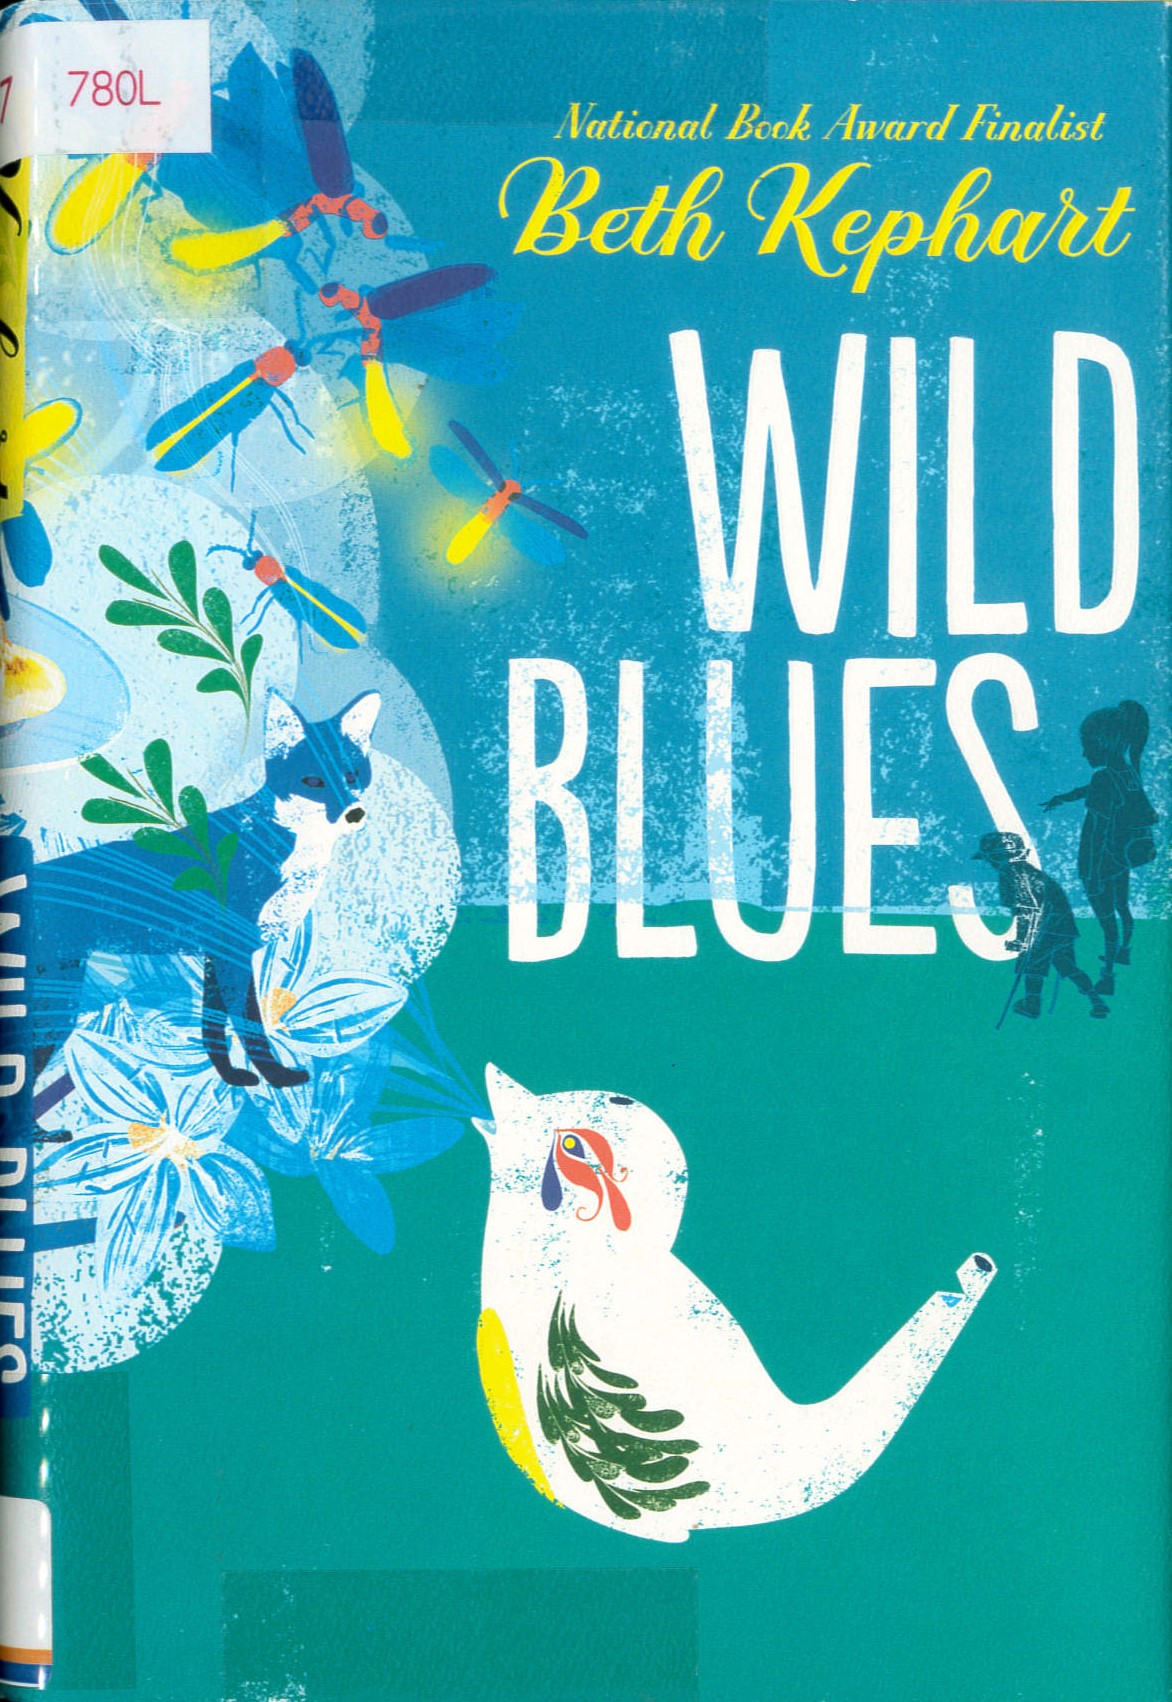 Wild blues /